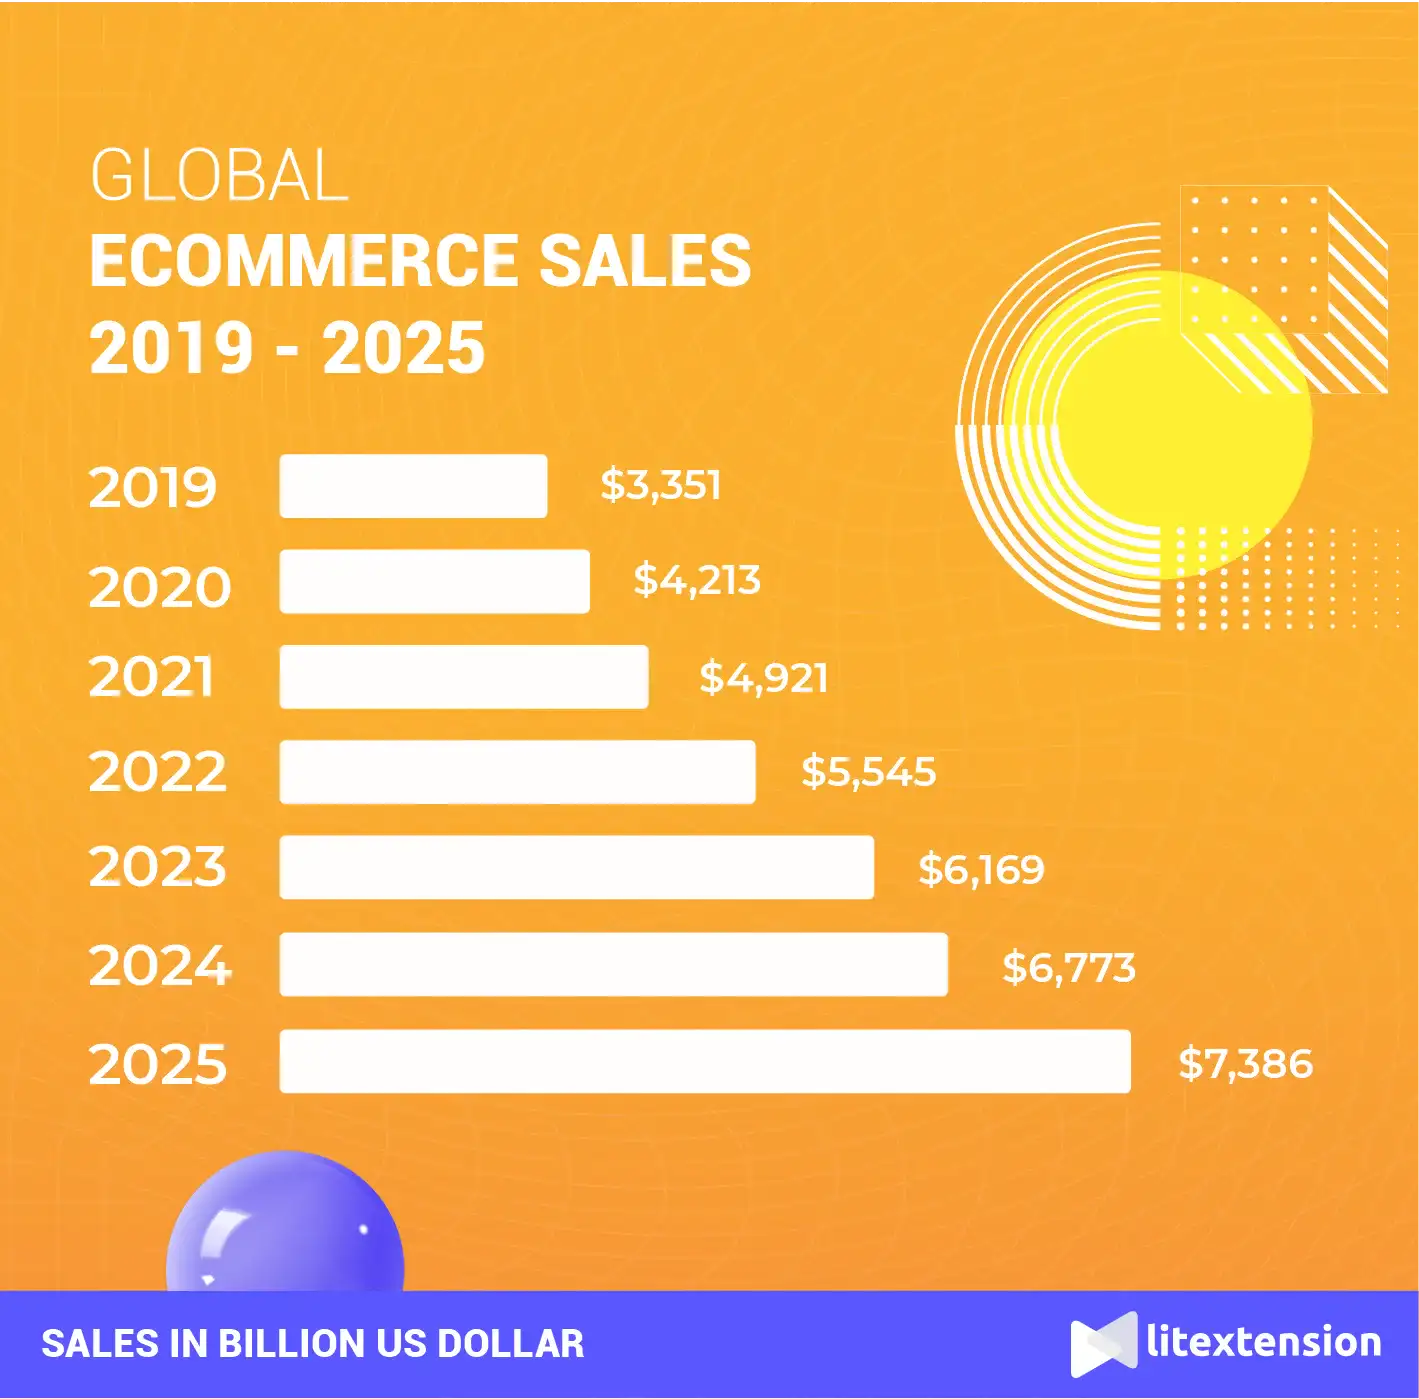 Global eCommerce sales report